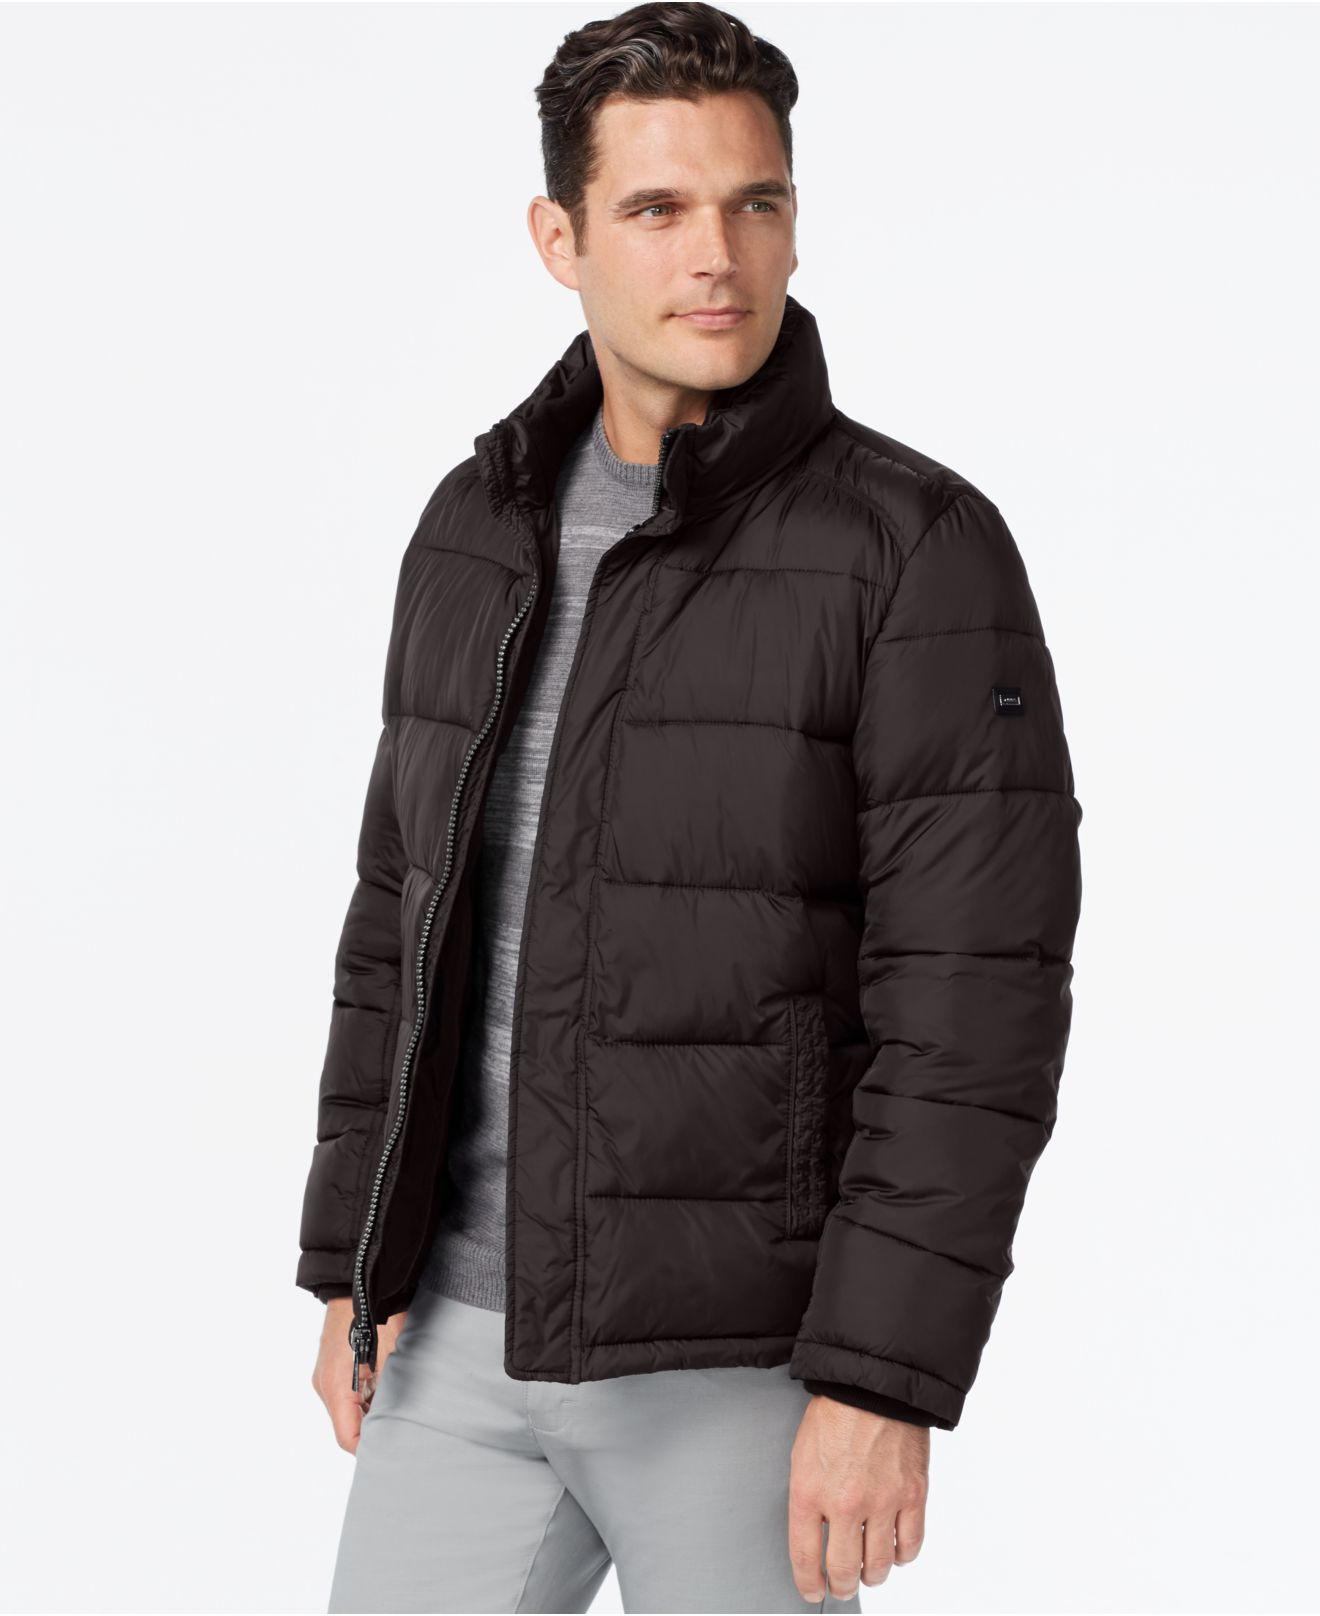 Aliexpress.com : Buy Winter Wool Trench Coat Men 2017 Slim